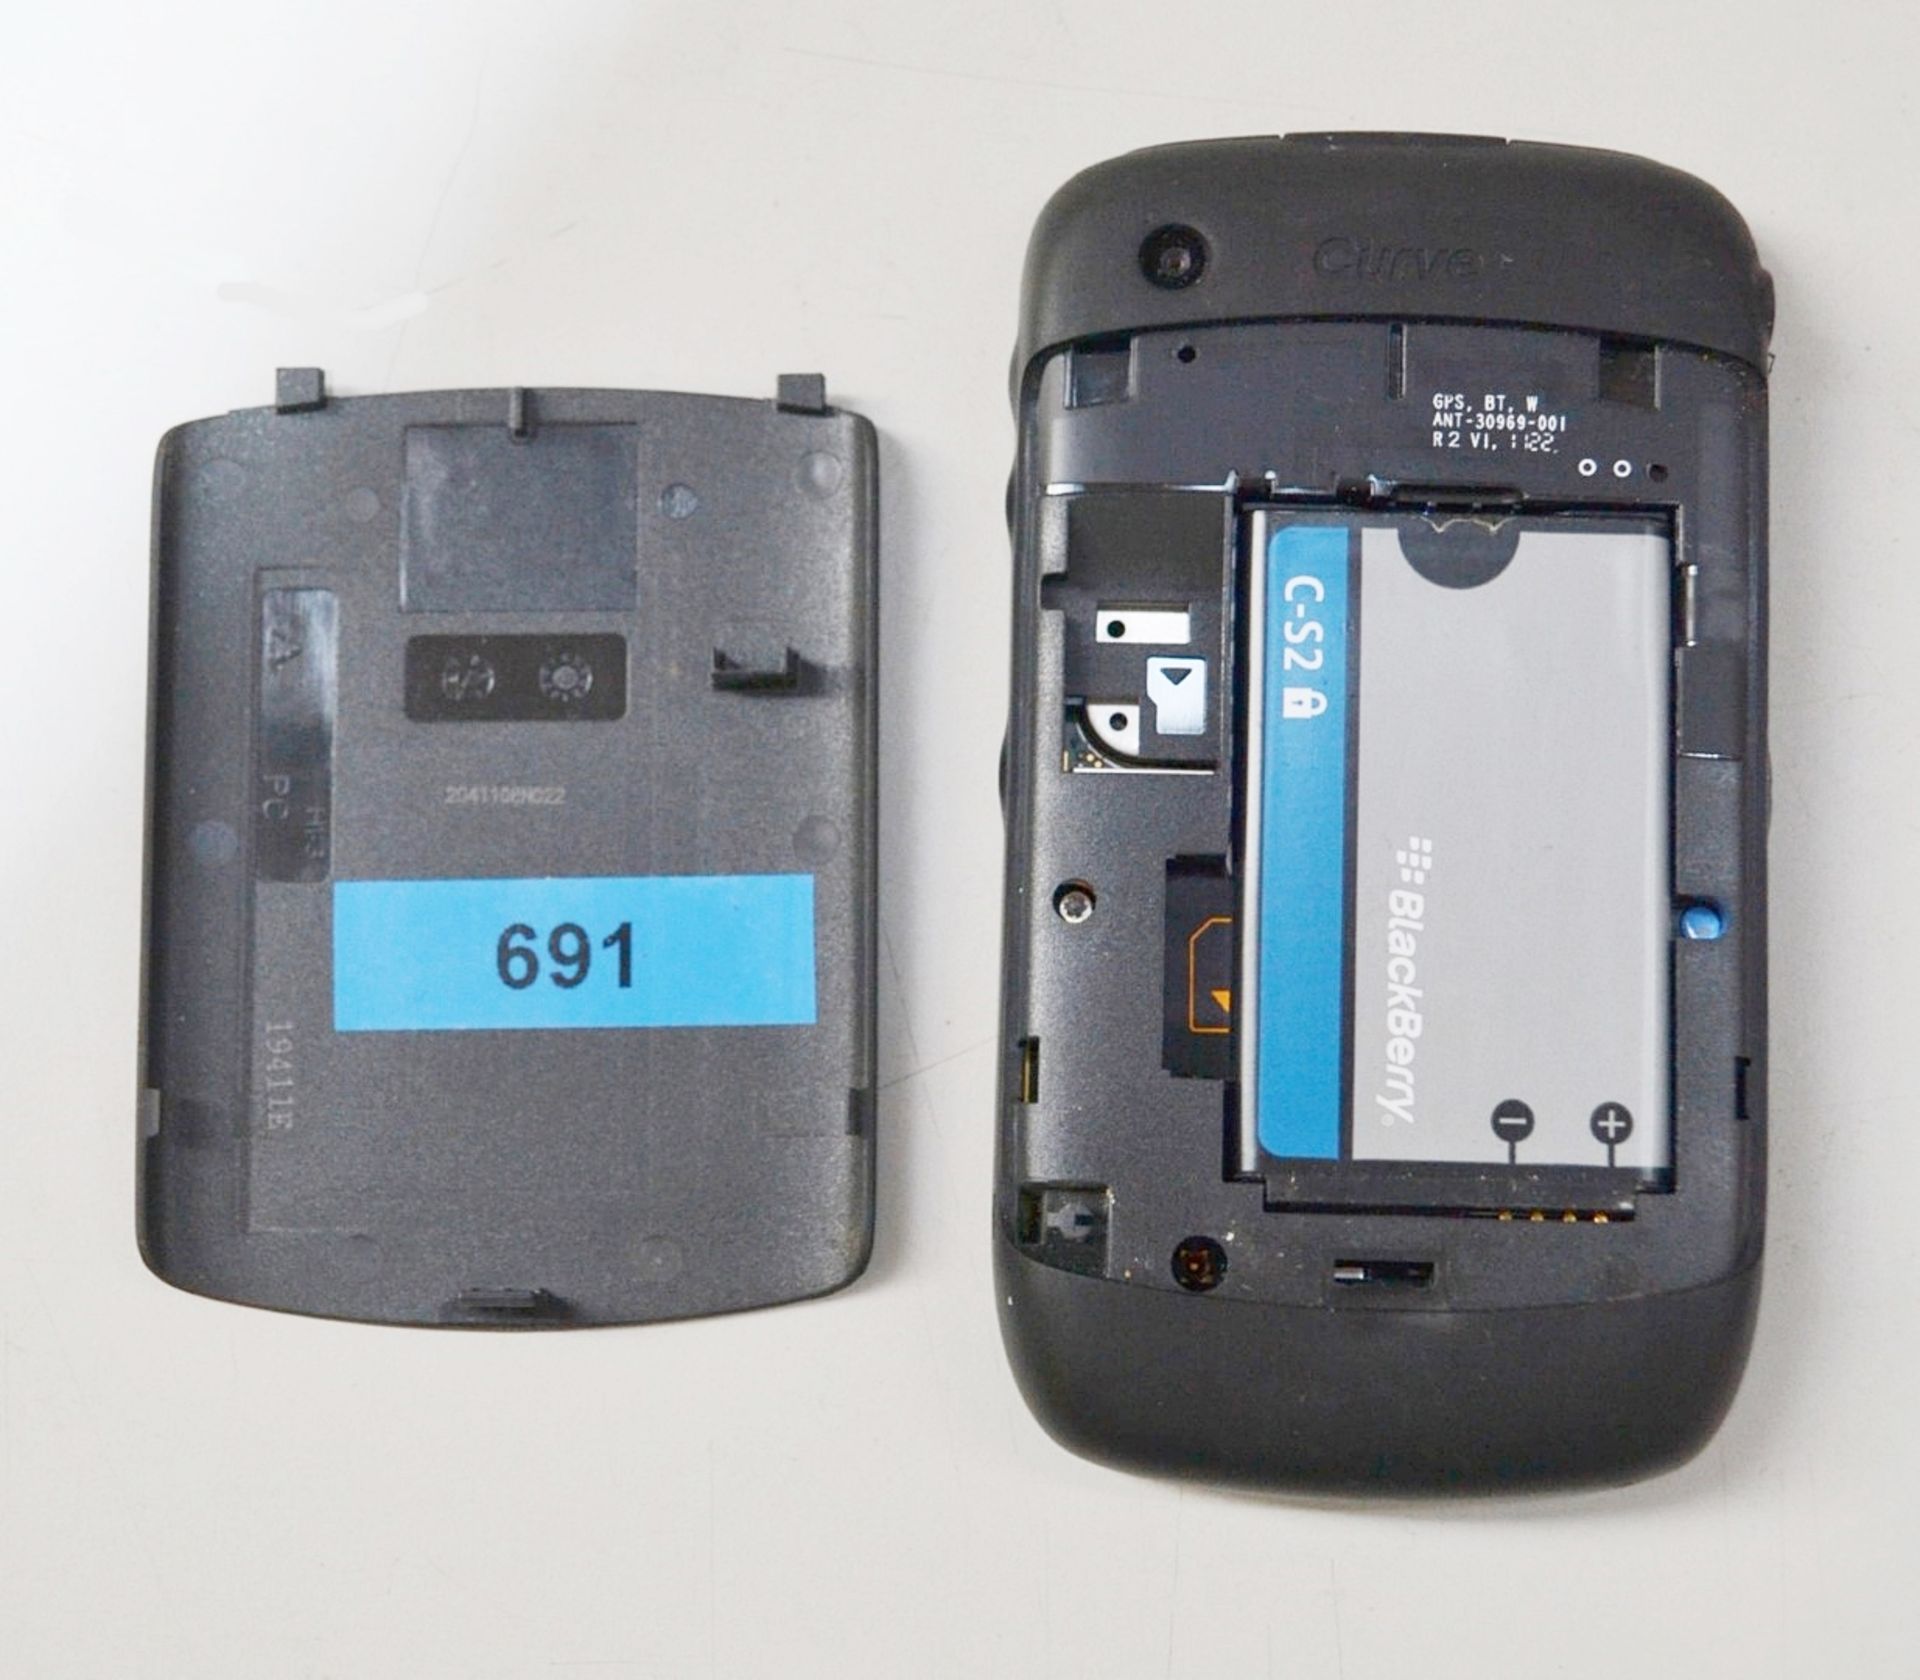 40 x Sim Free Blackberry and Samsung Phones - Ref: LD368 - CL409 - Altrincham WA14 - Image 7 of 20